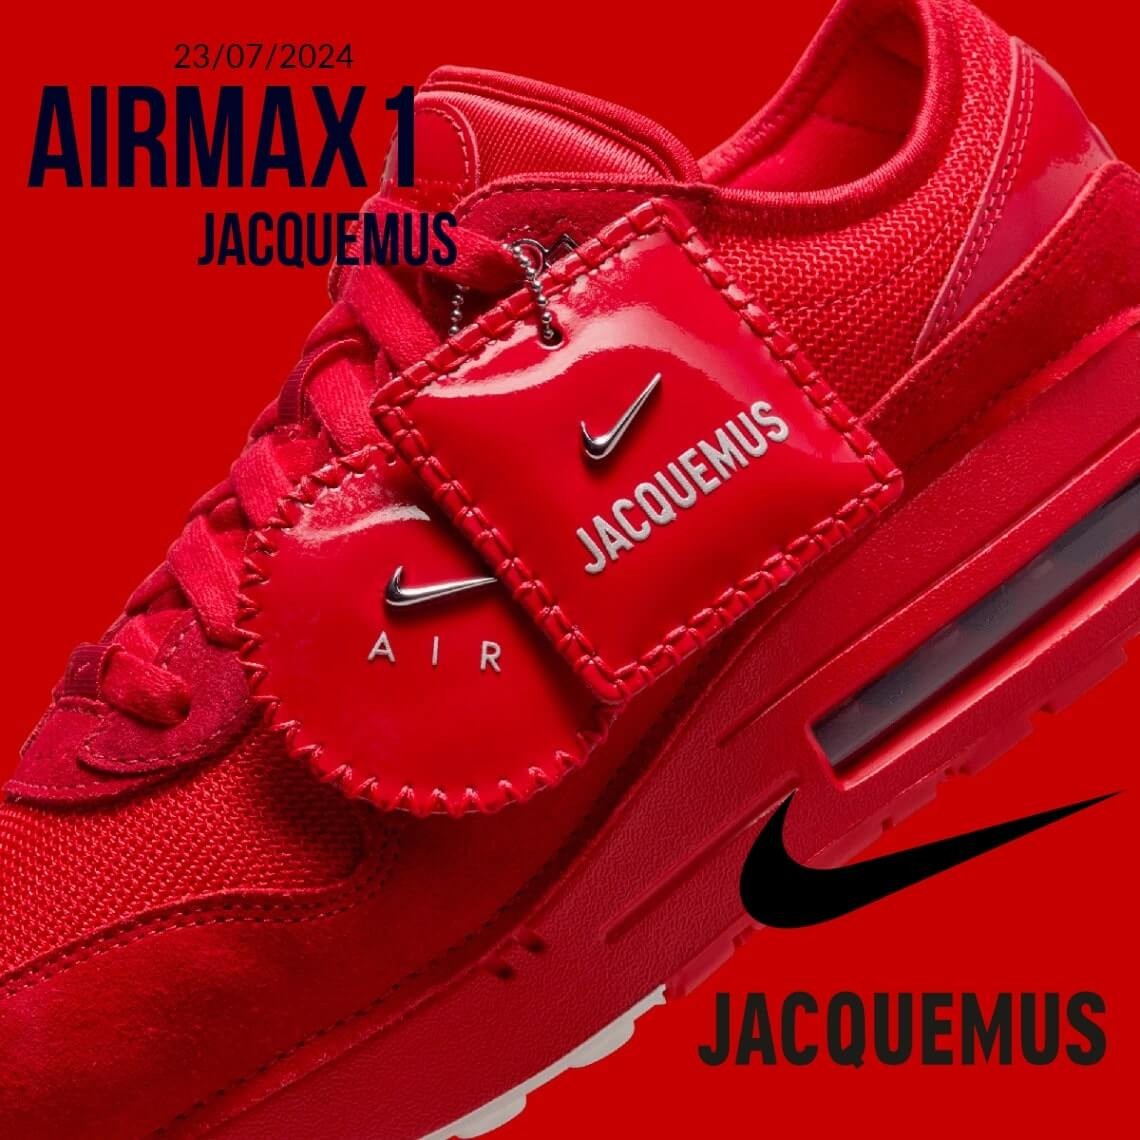  Nine Air Max Jacquemus